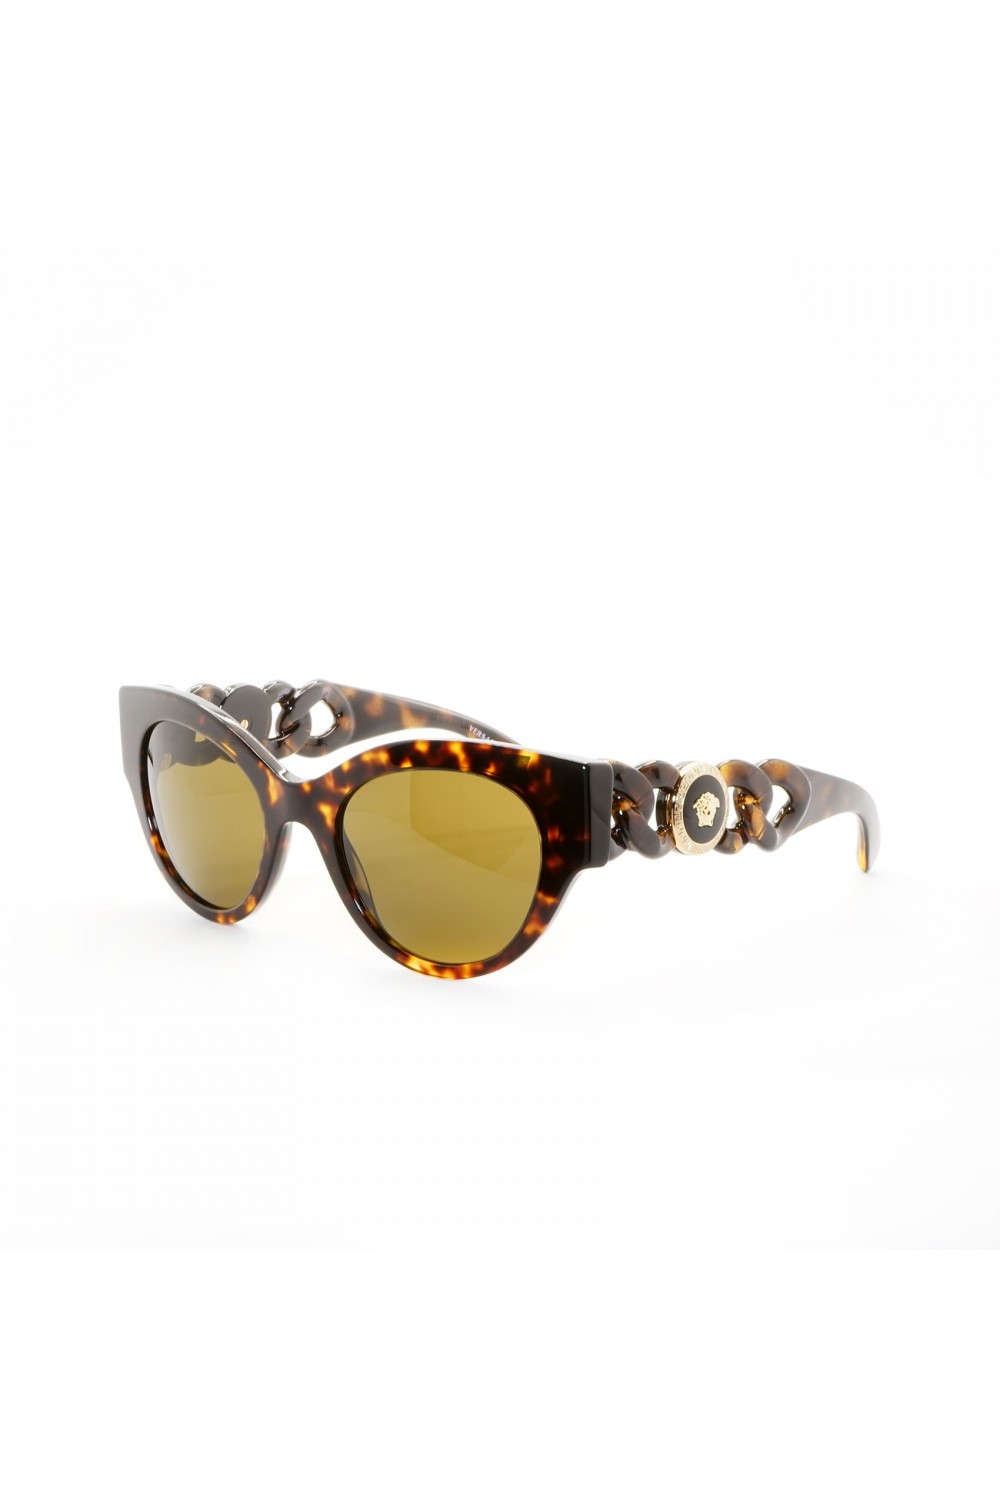 Versace - Occhiali da sole in celluloide cat eye per donna tartarugato - 4408